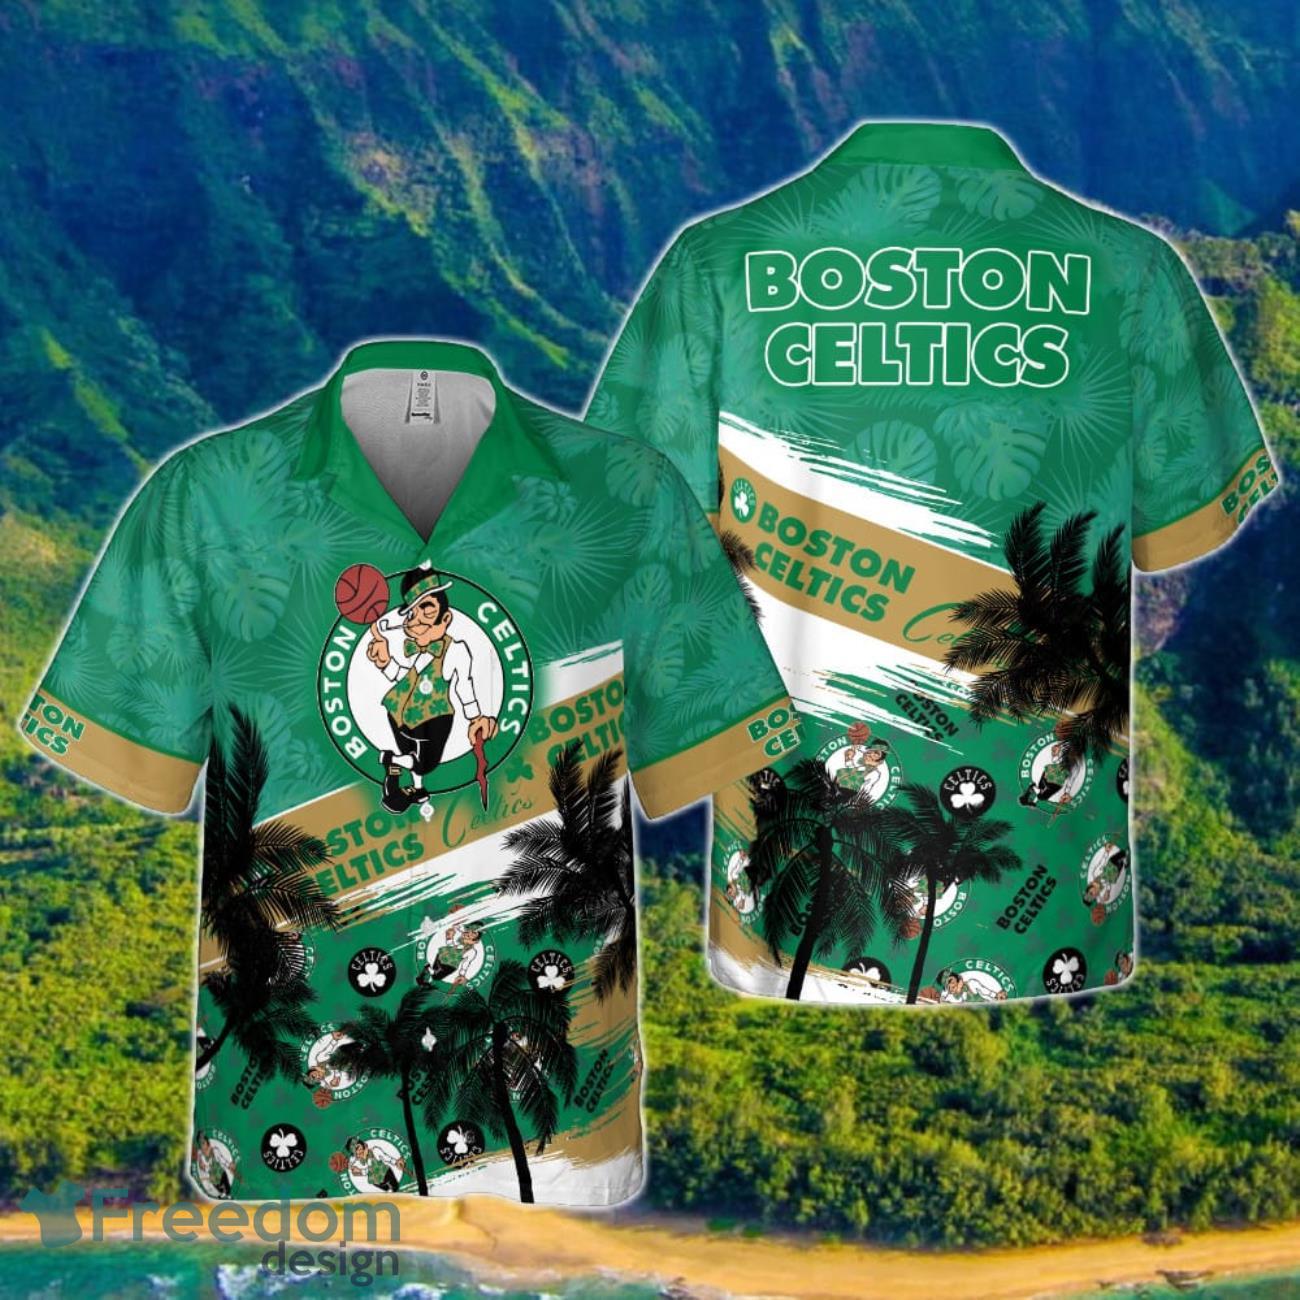 Boston Celtics National Basketball Association 2023 Hawaiian Shirt For Men  Women - Freedomdesign